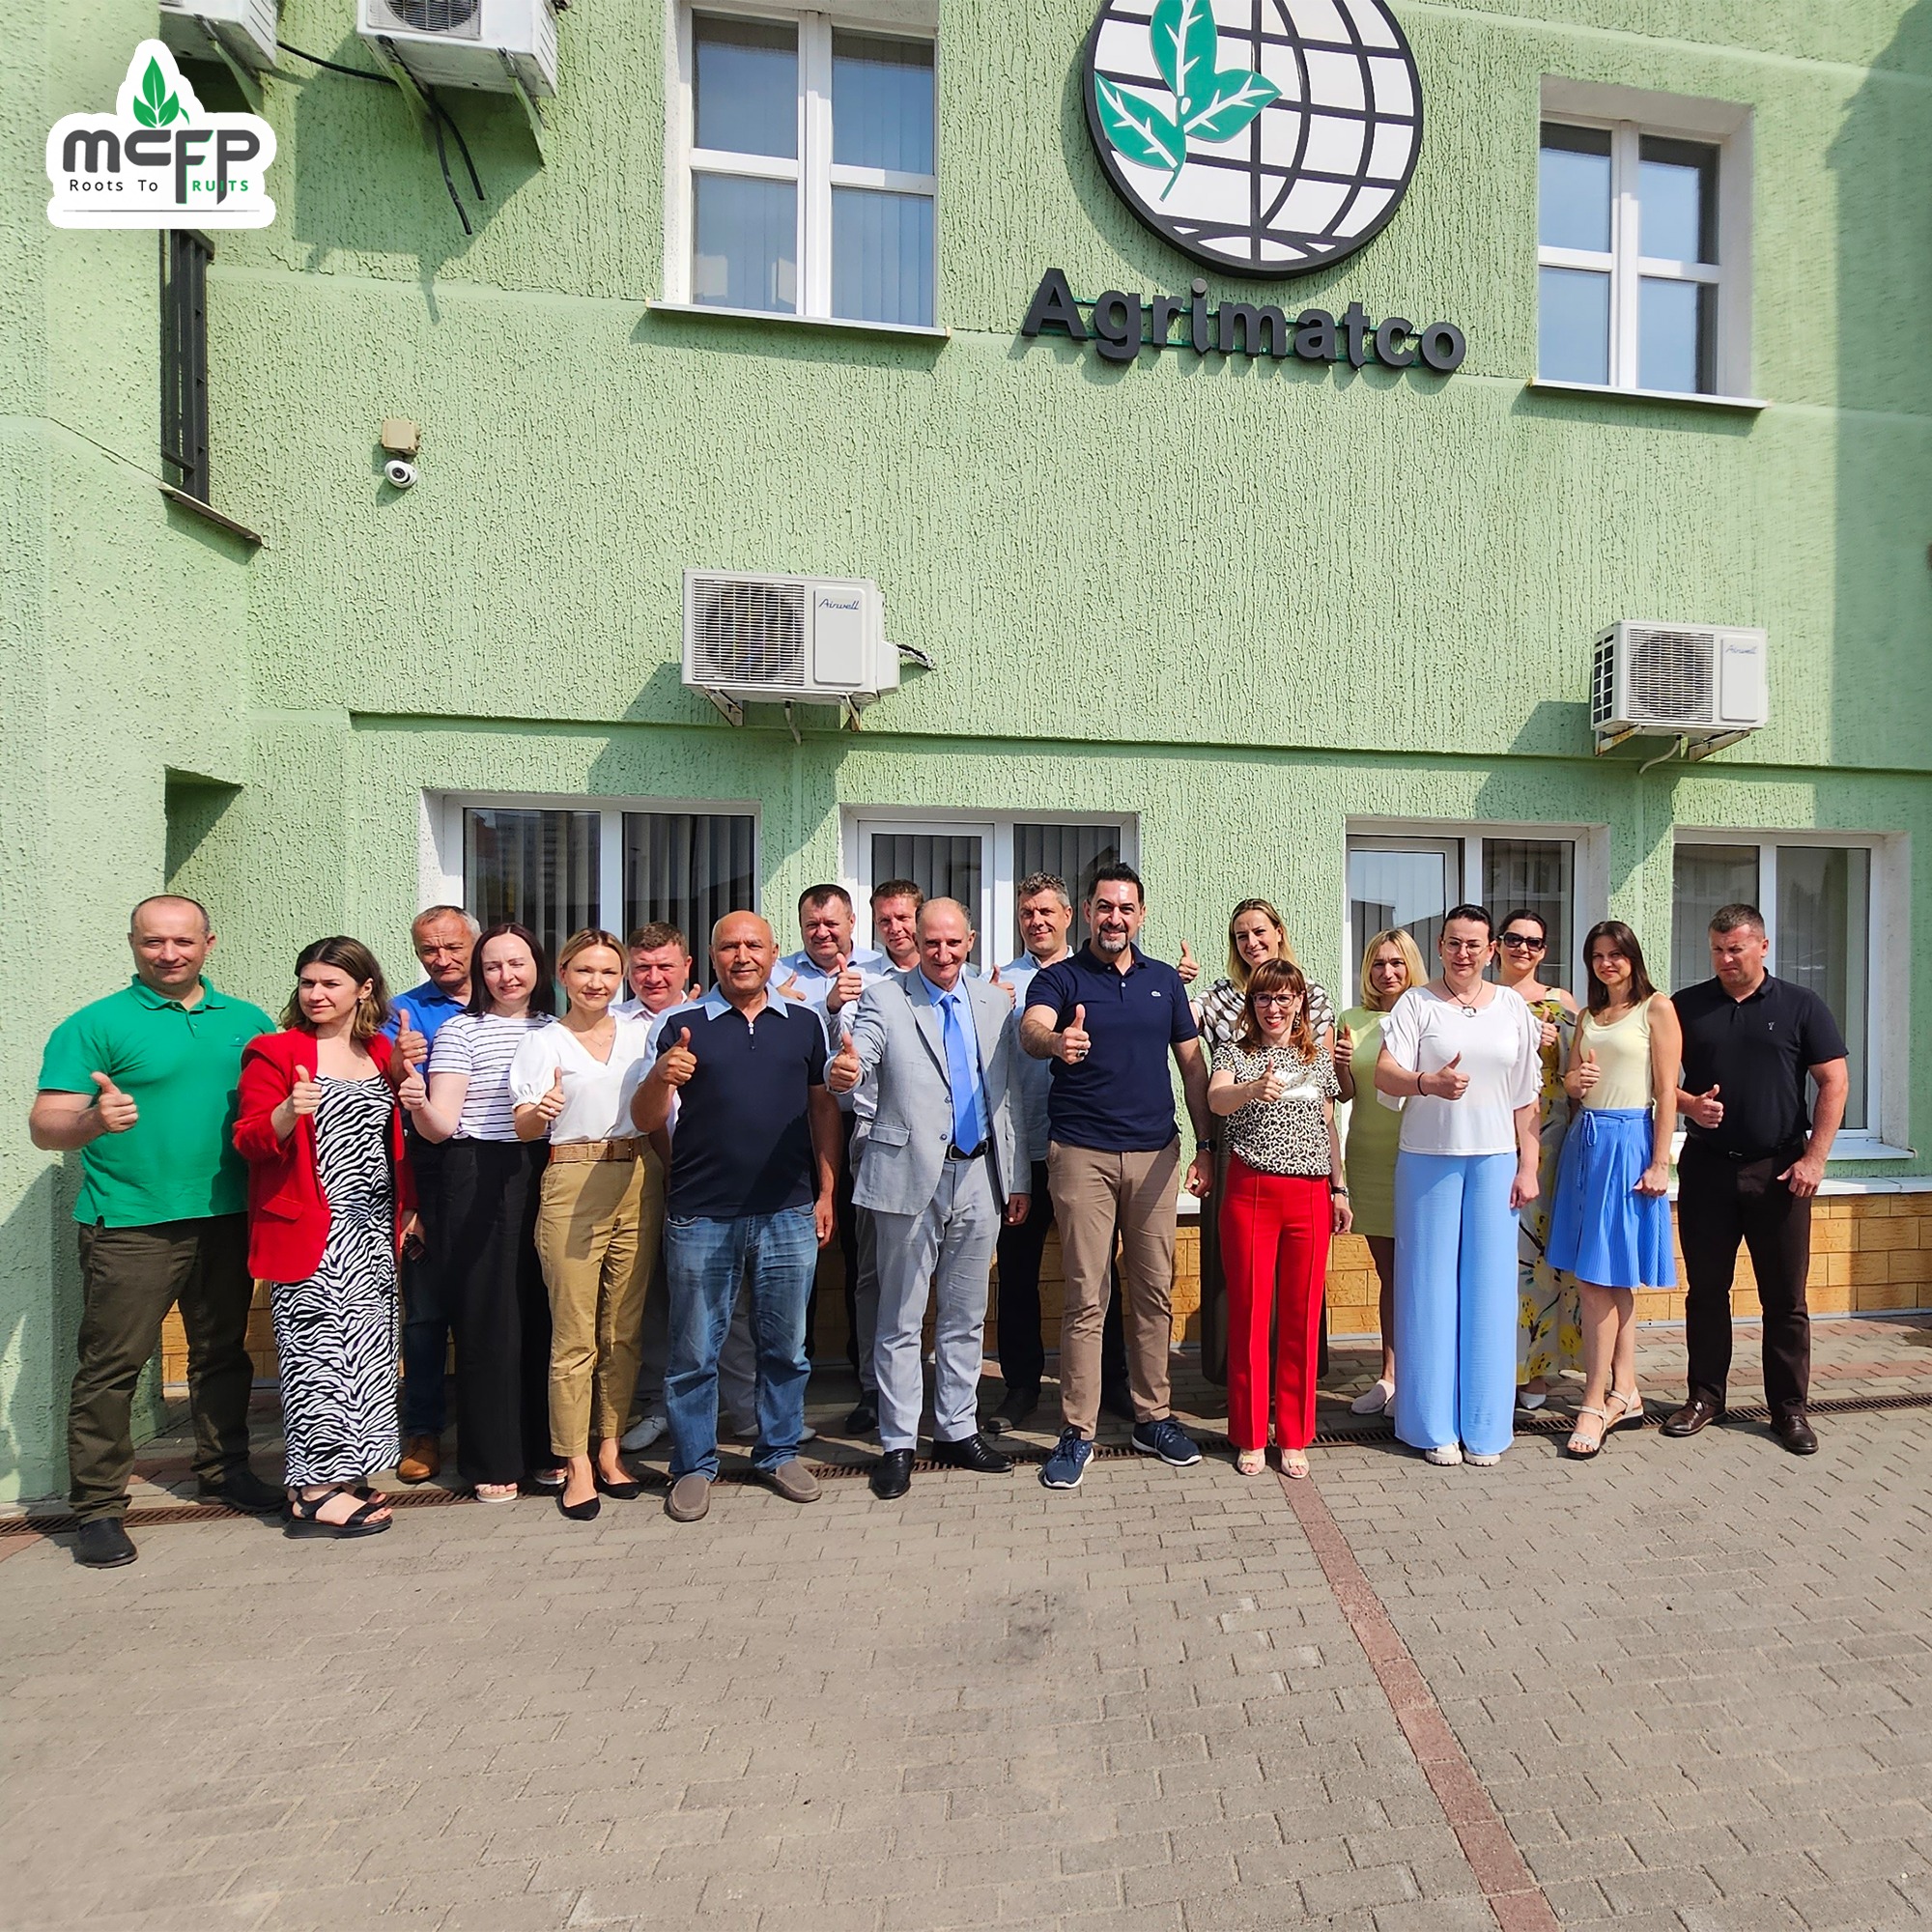 MCFP visits Agrimatco-96 in Belarus